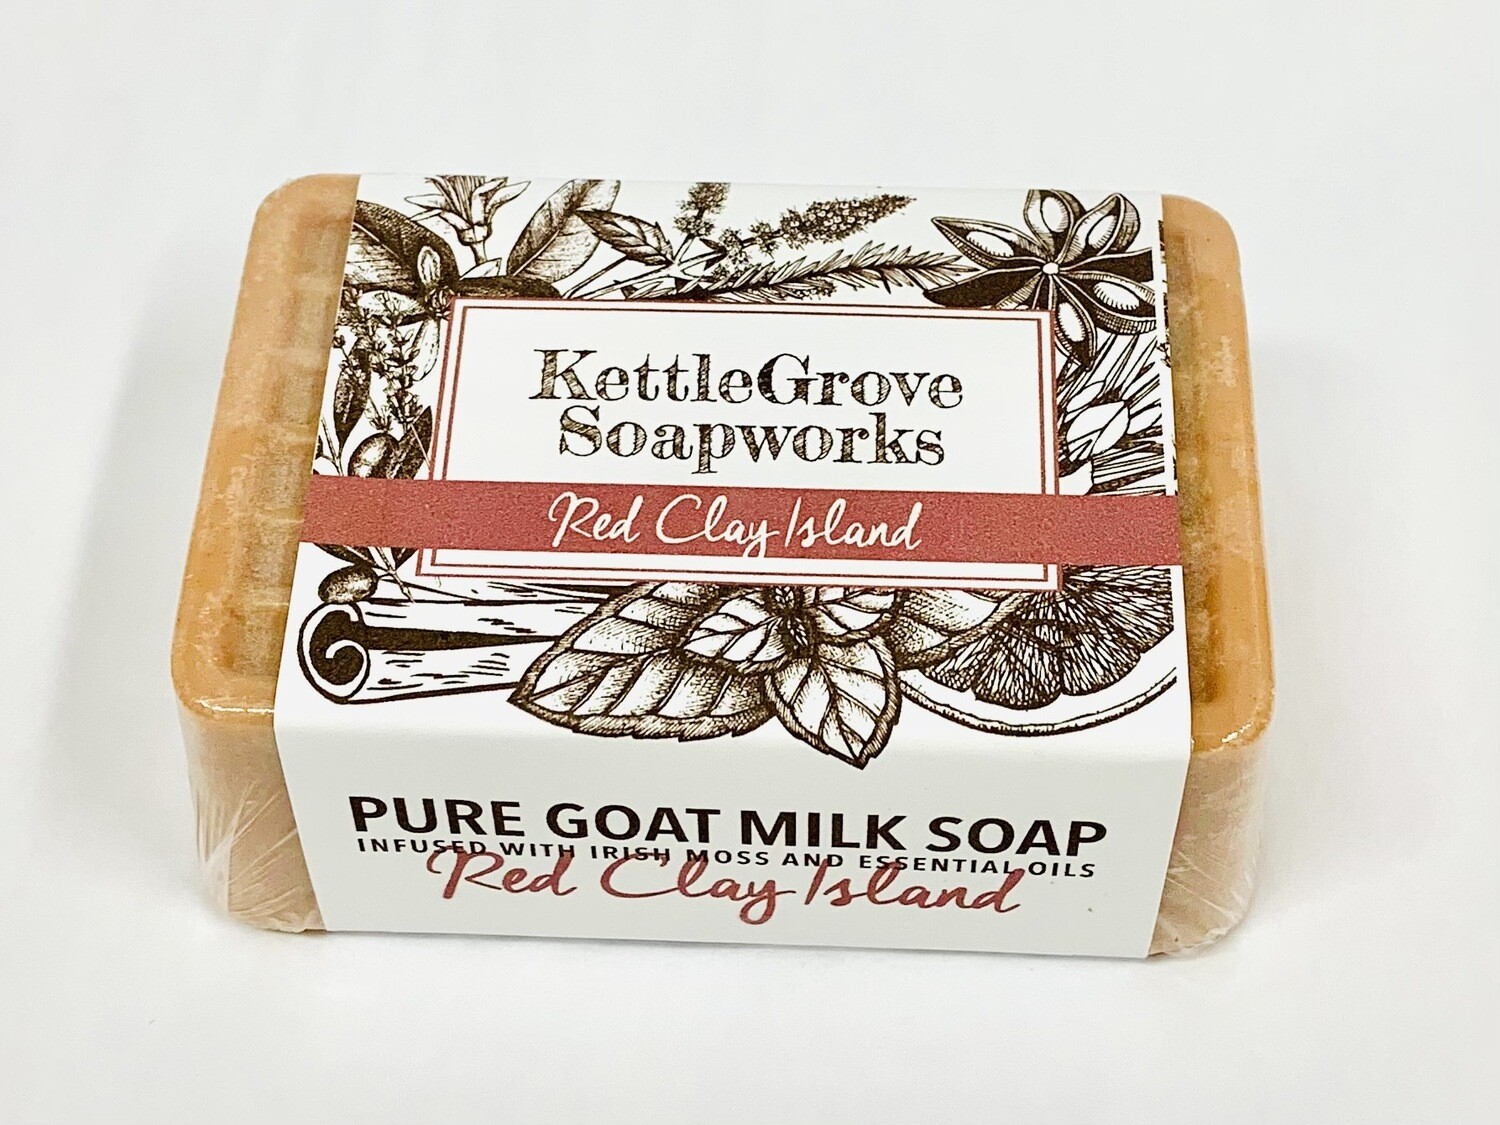 KettleGrove Goat Milk Soap- Red Clay Island